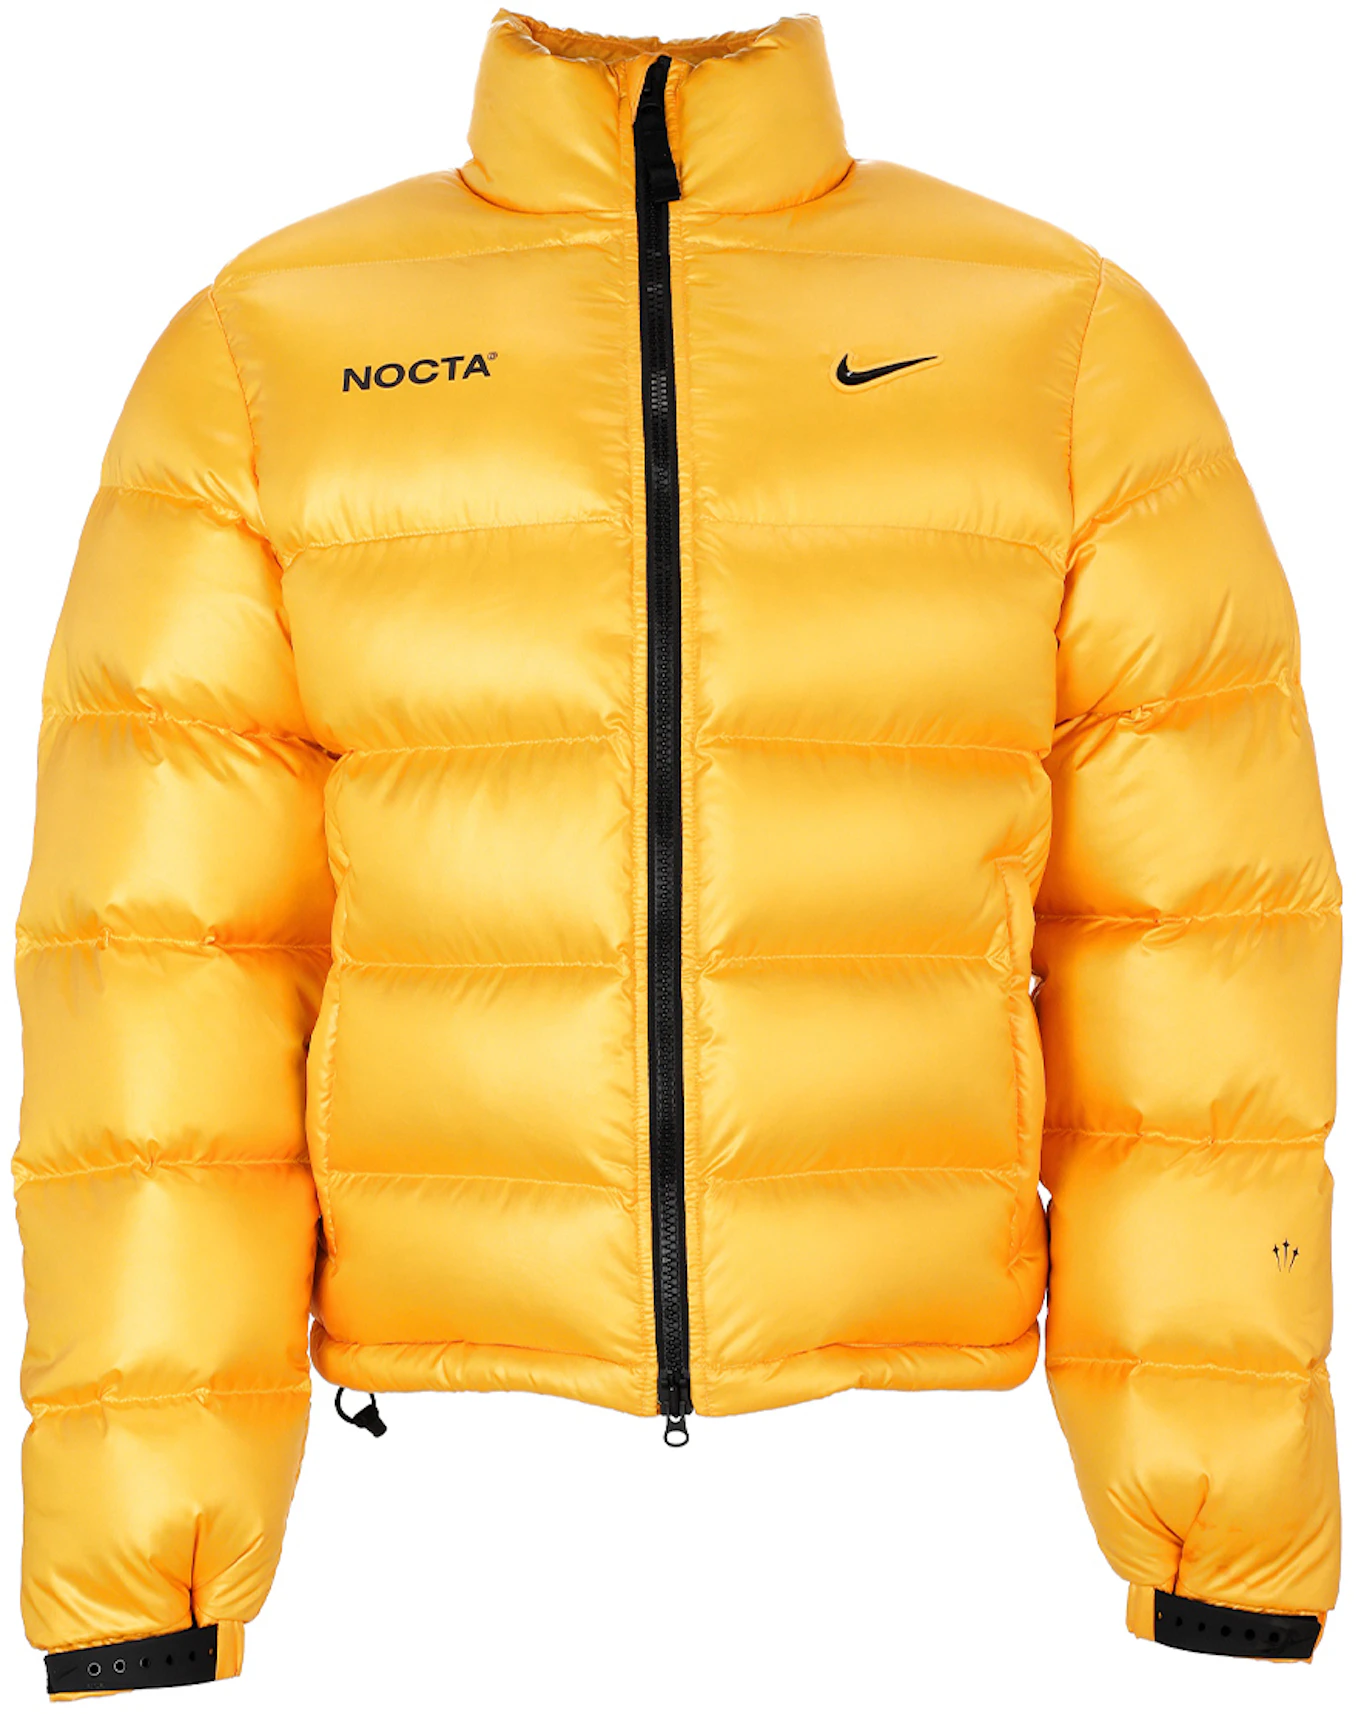 Confuso Oír de Atlas Nike x Drake NOCTA Sunset Puffer Jacket Yellow - FW20 - ES